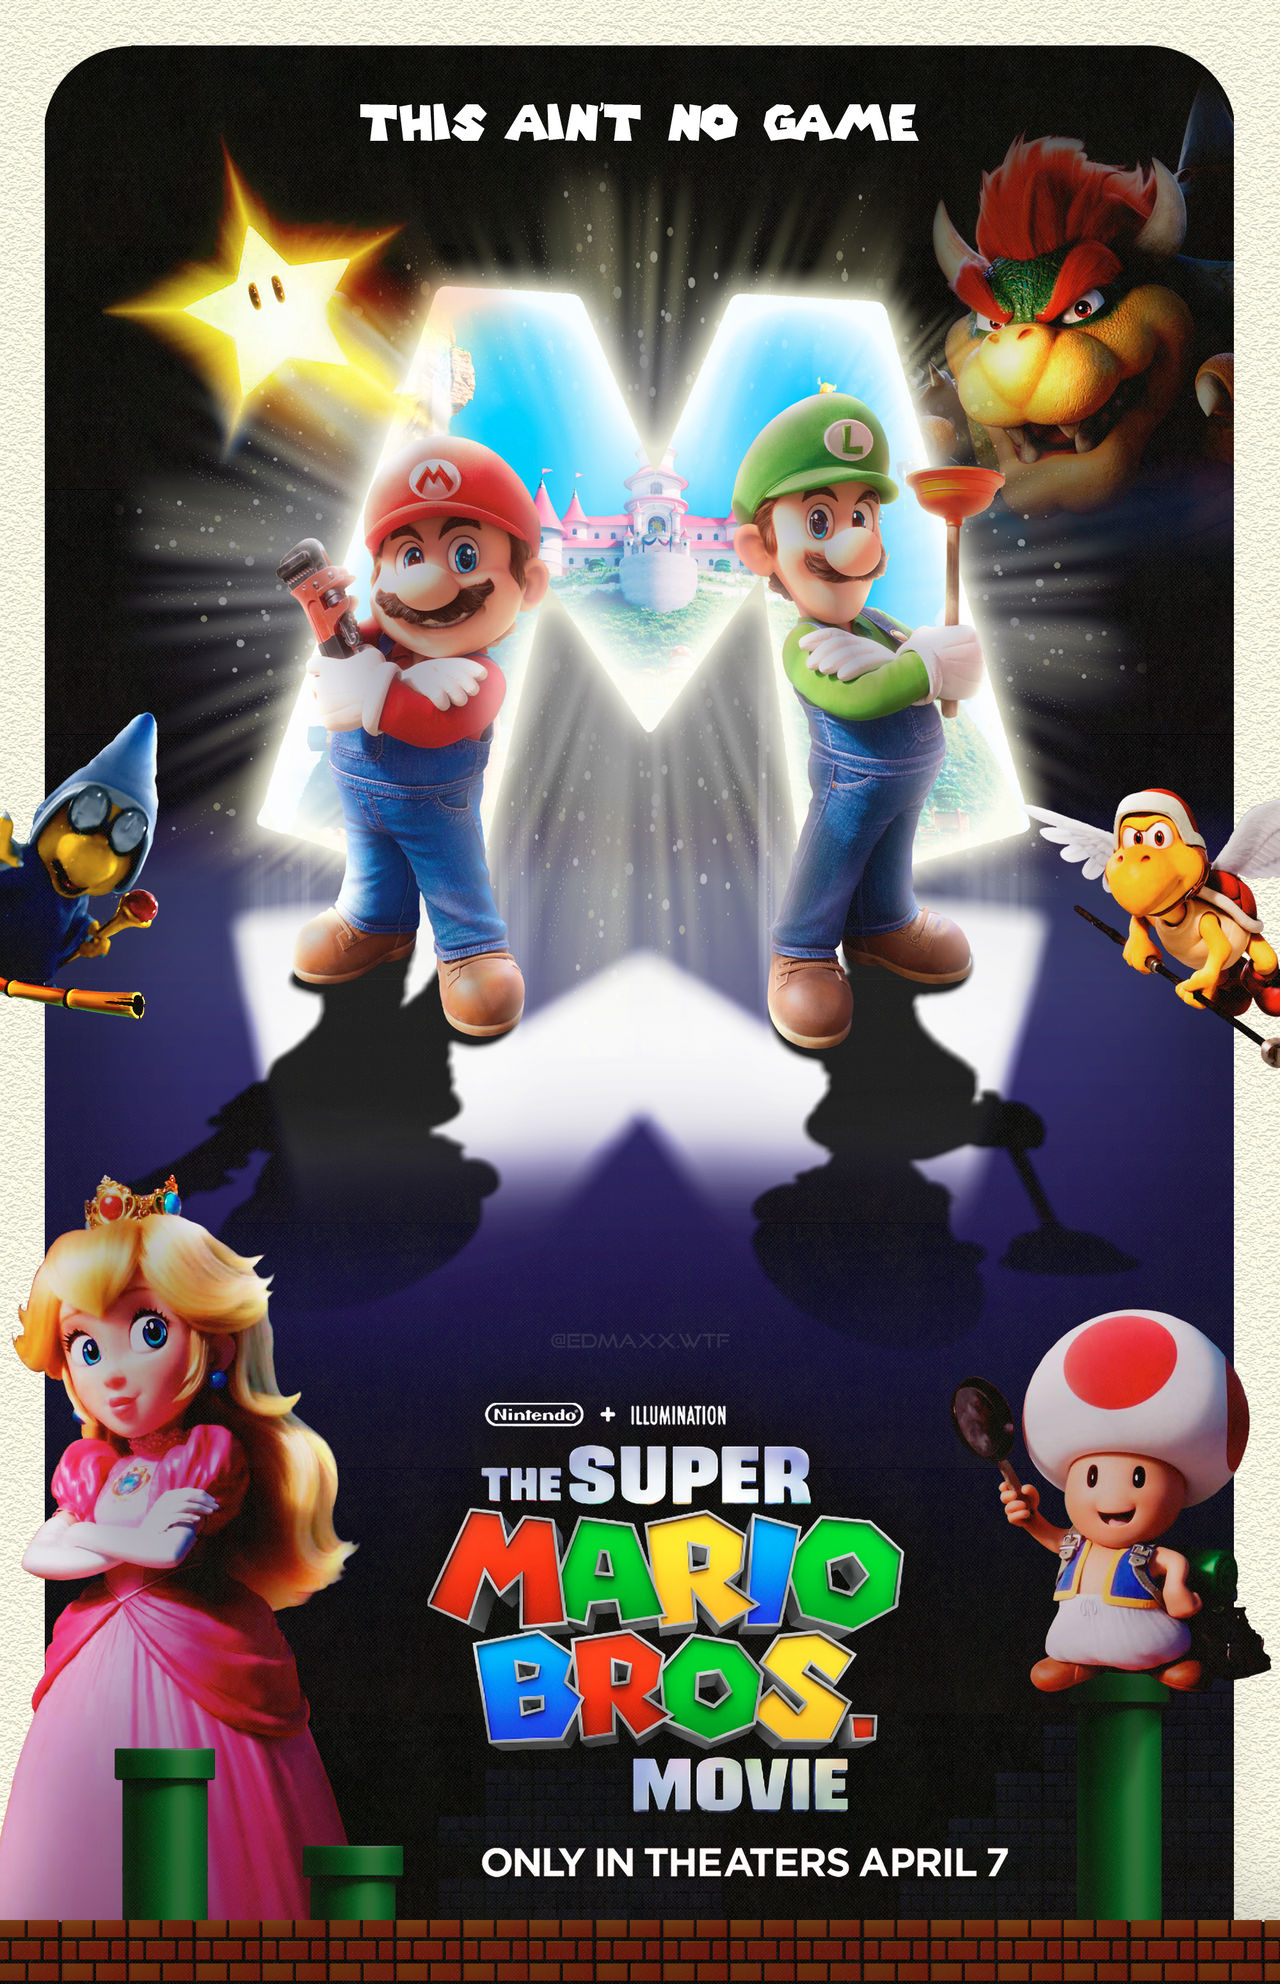 Super Mario Bros. Movie Poster Design by edmaxxwtf on DeviantArt